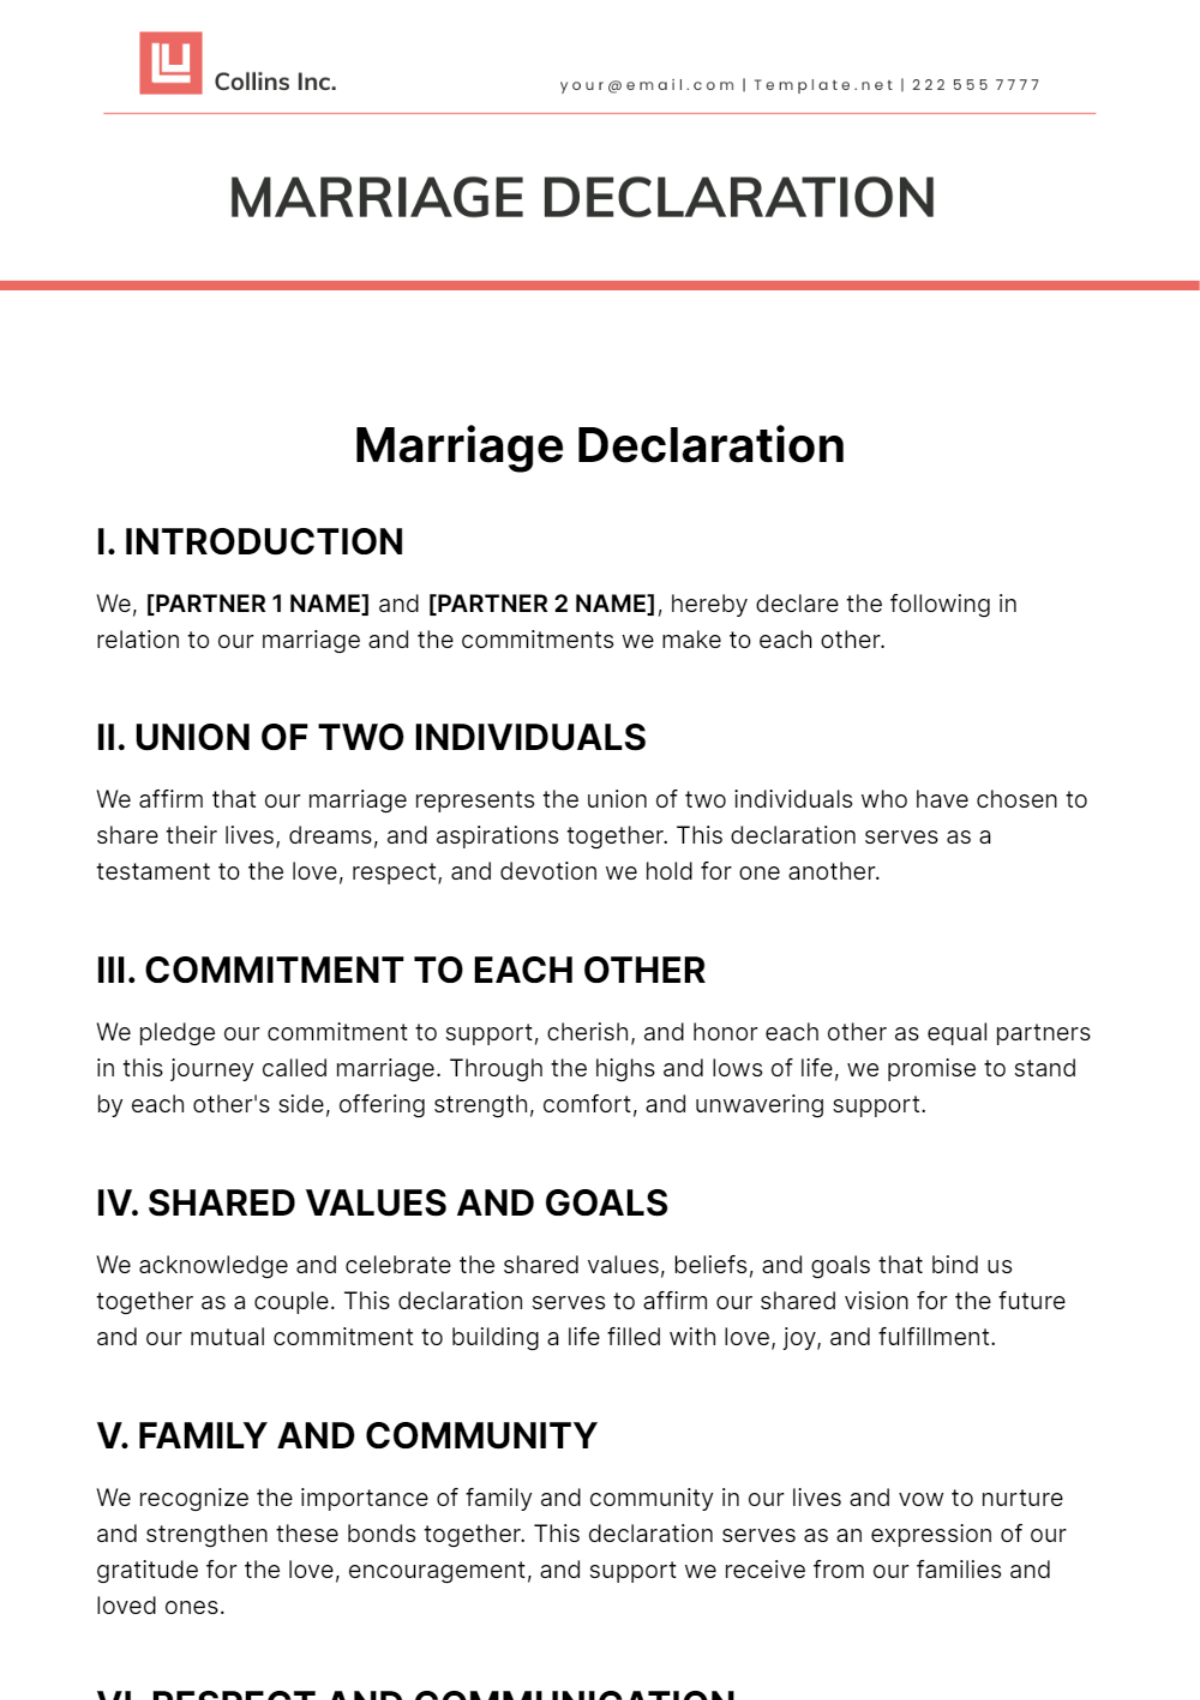 Marriage Declaration Template